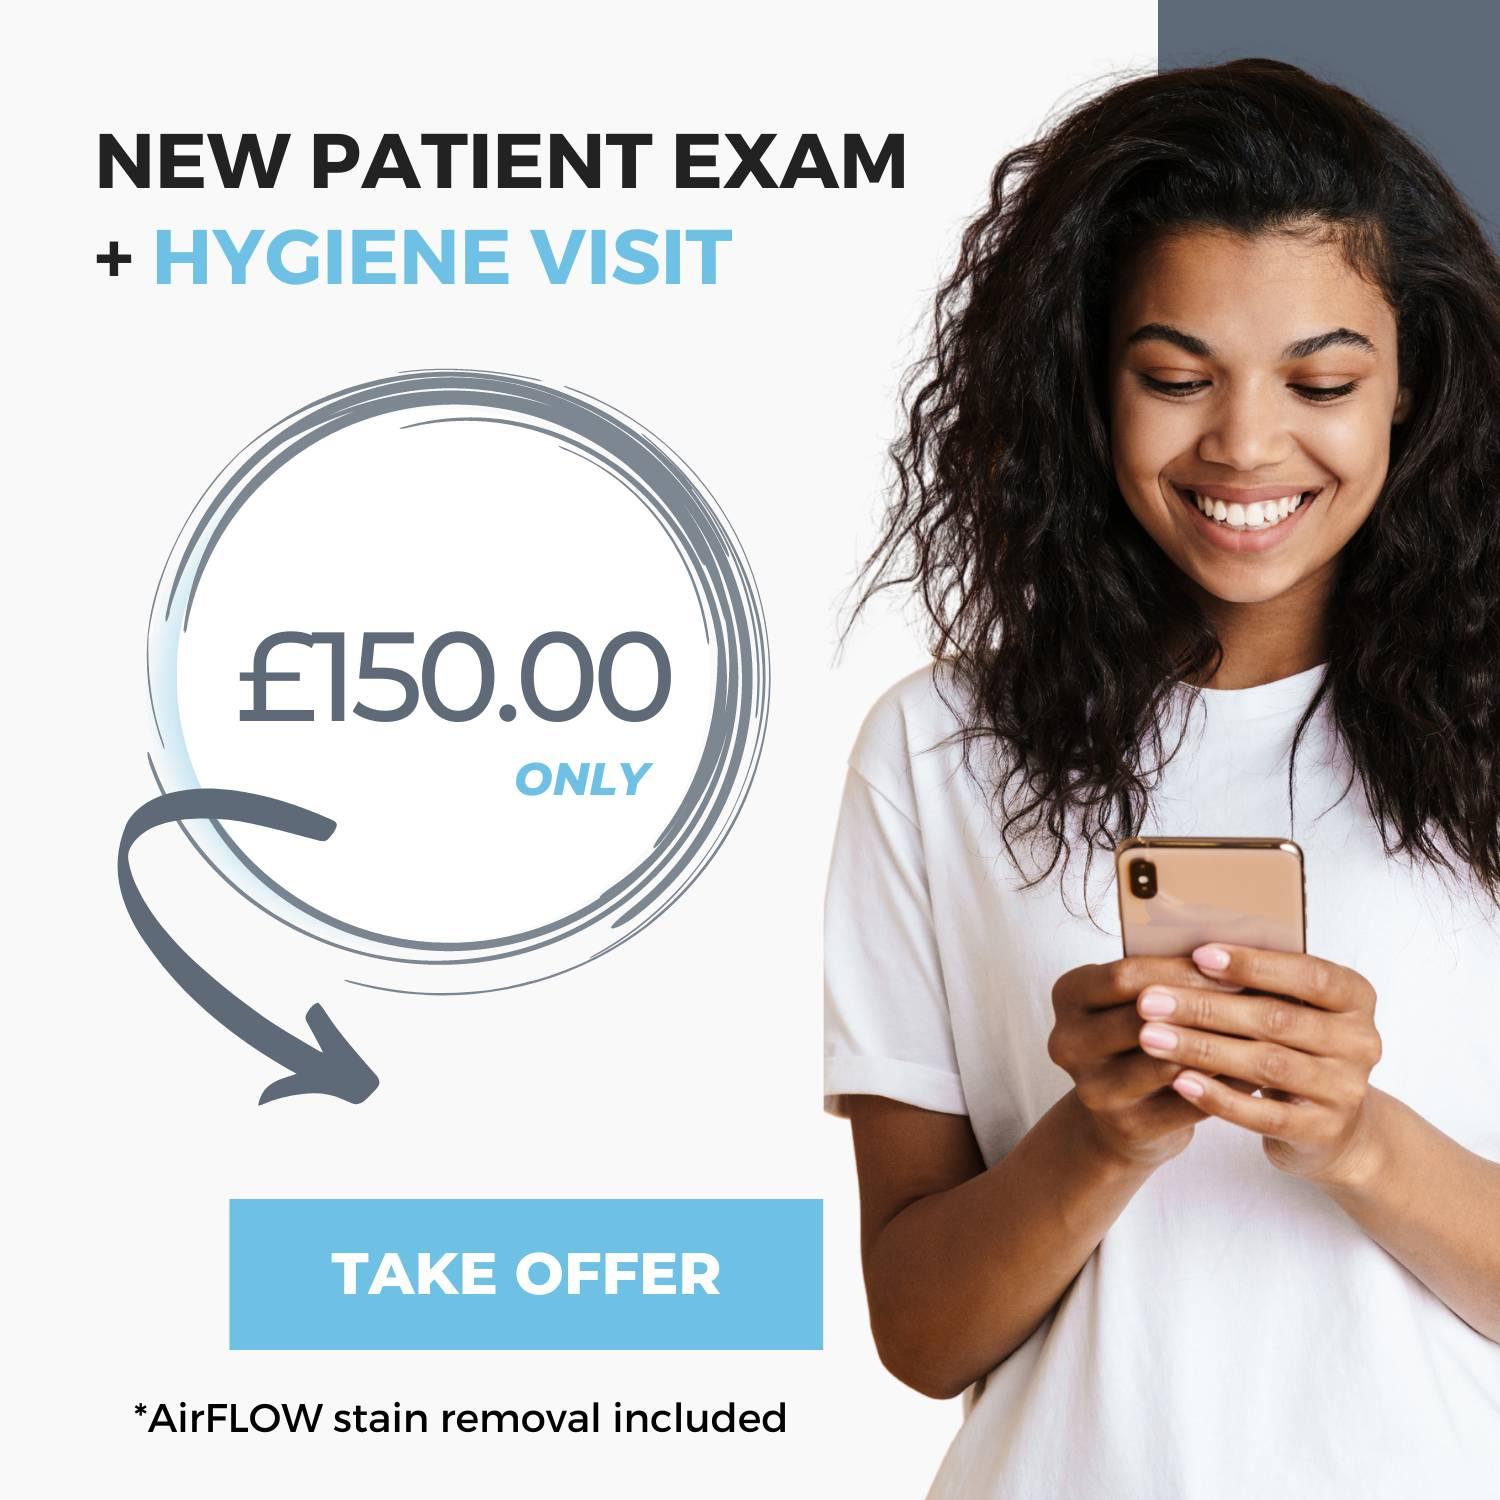 new patient exam + hygiene visit offer image